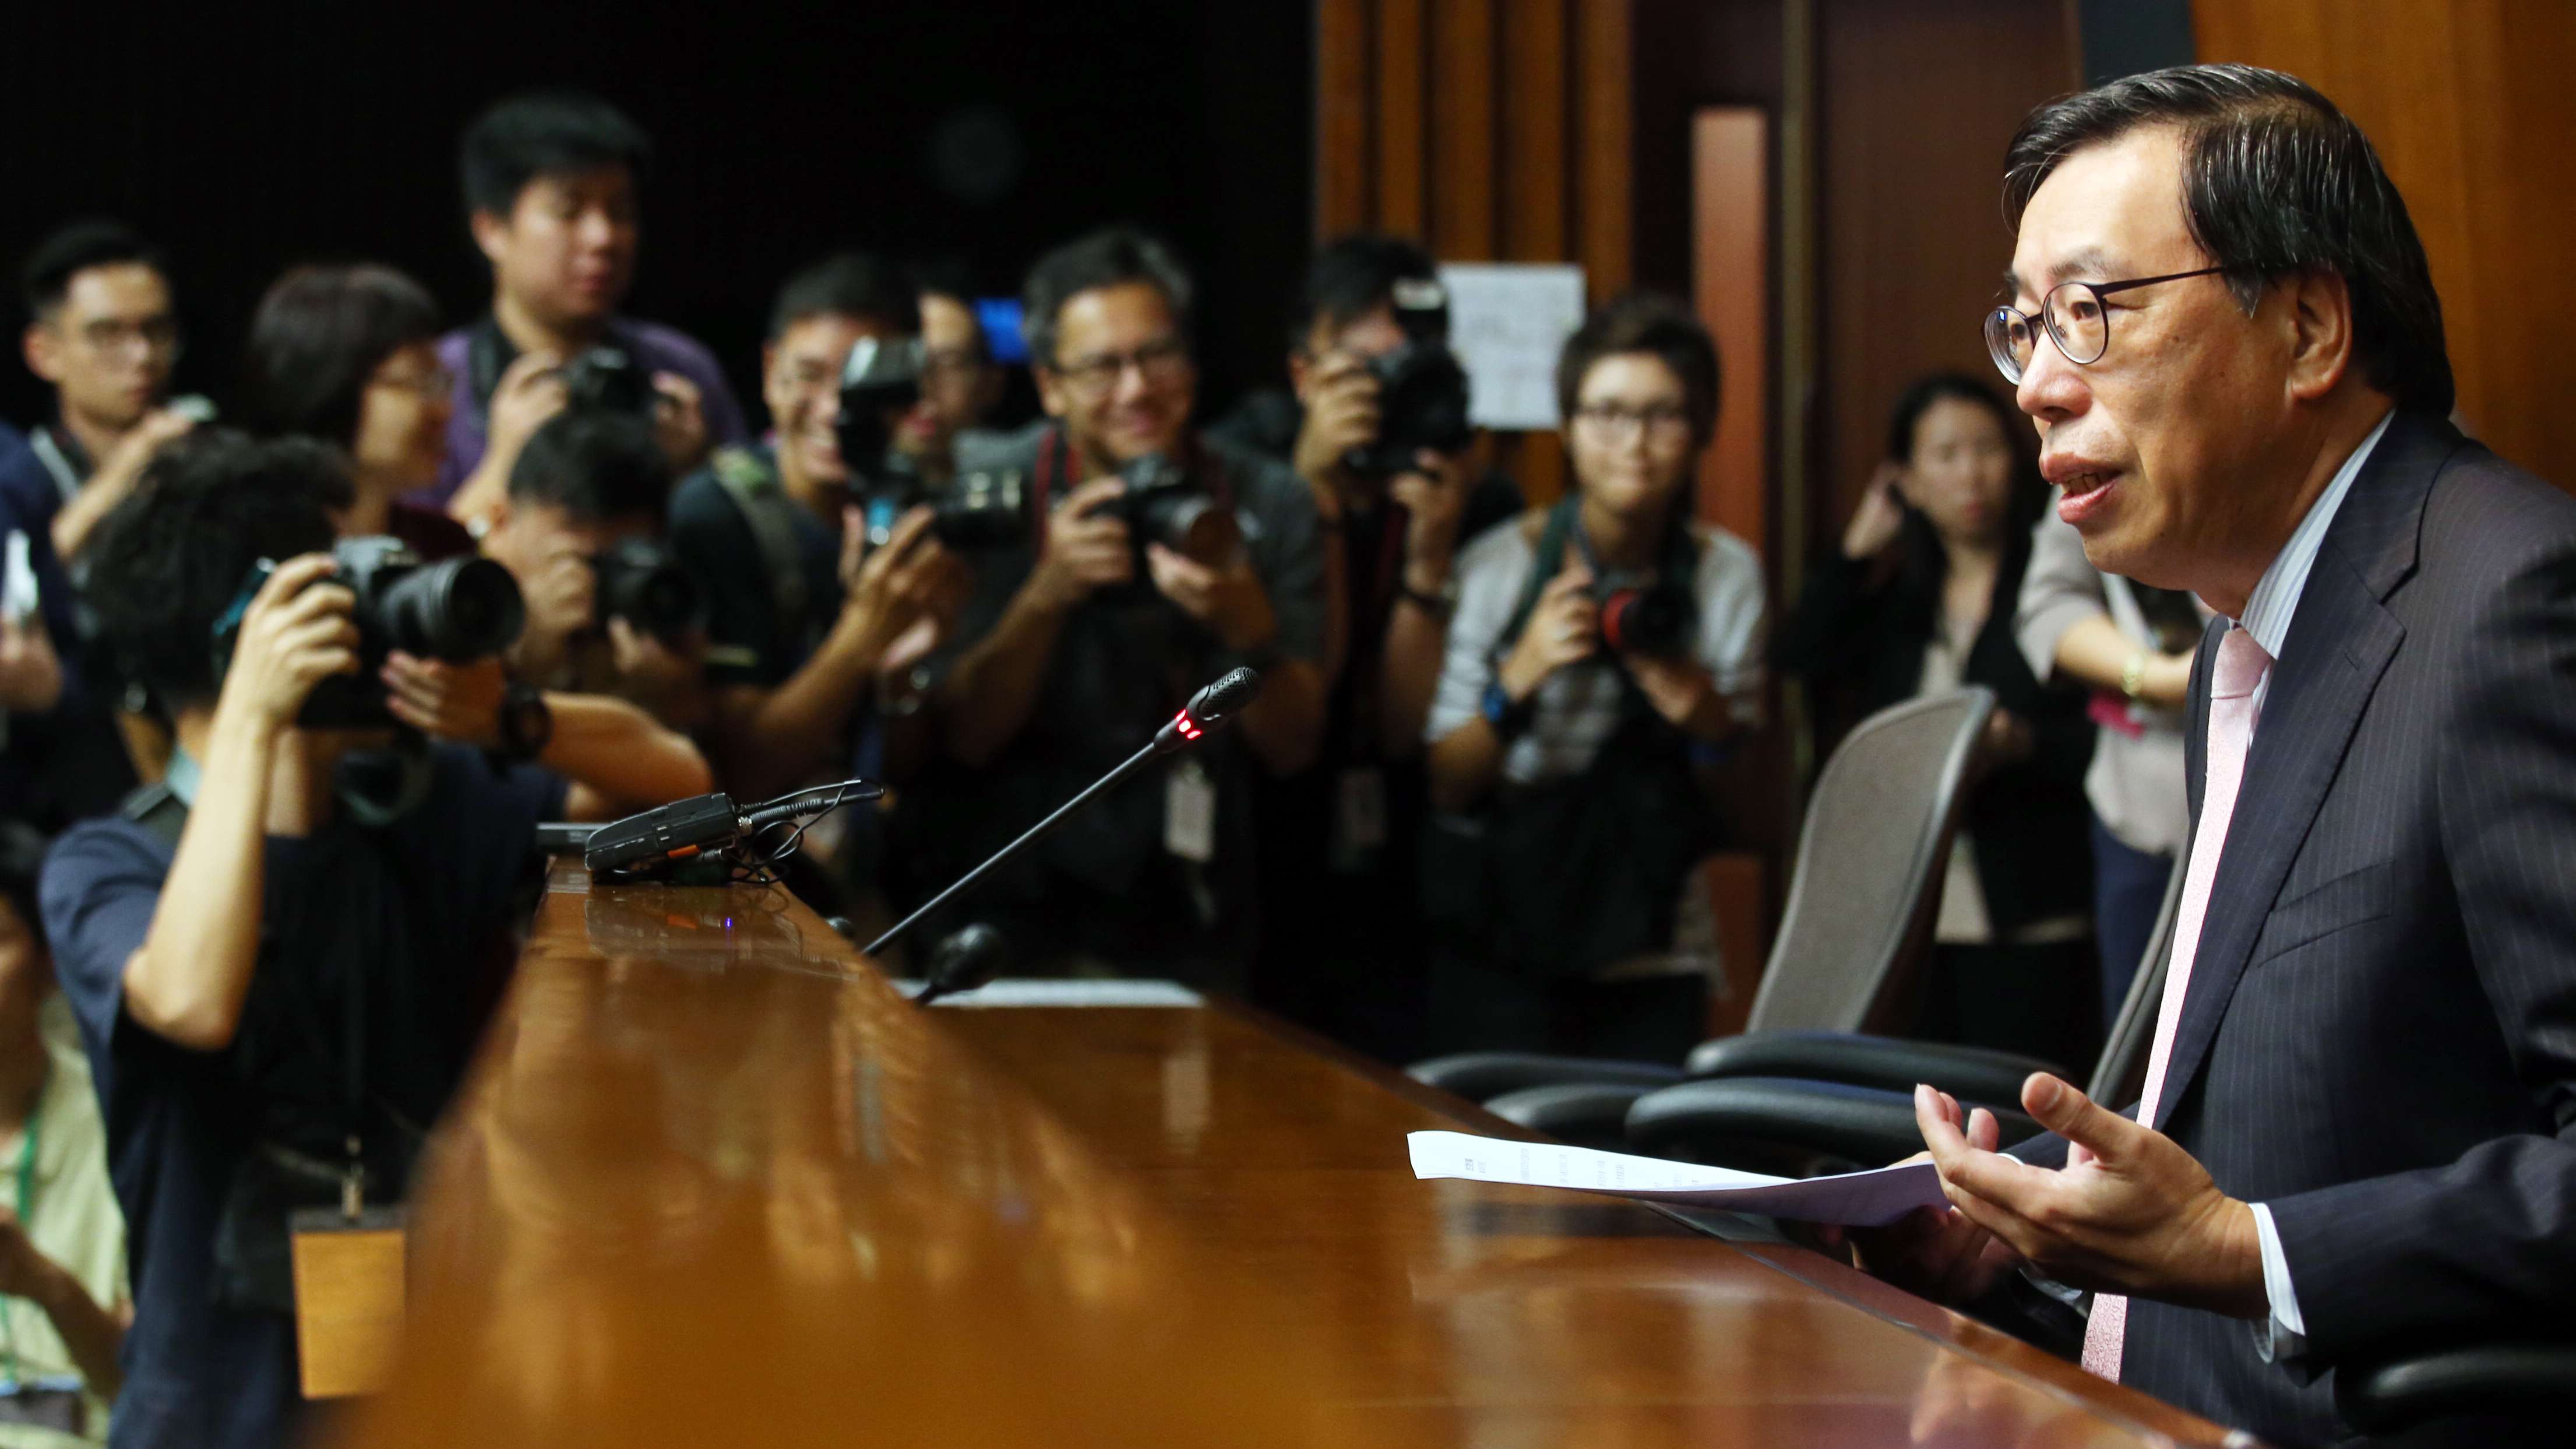 Legco president Andrew Leung Kwan-yuen called the walkout “unfortunate”. Photo: David Wong